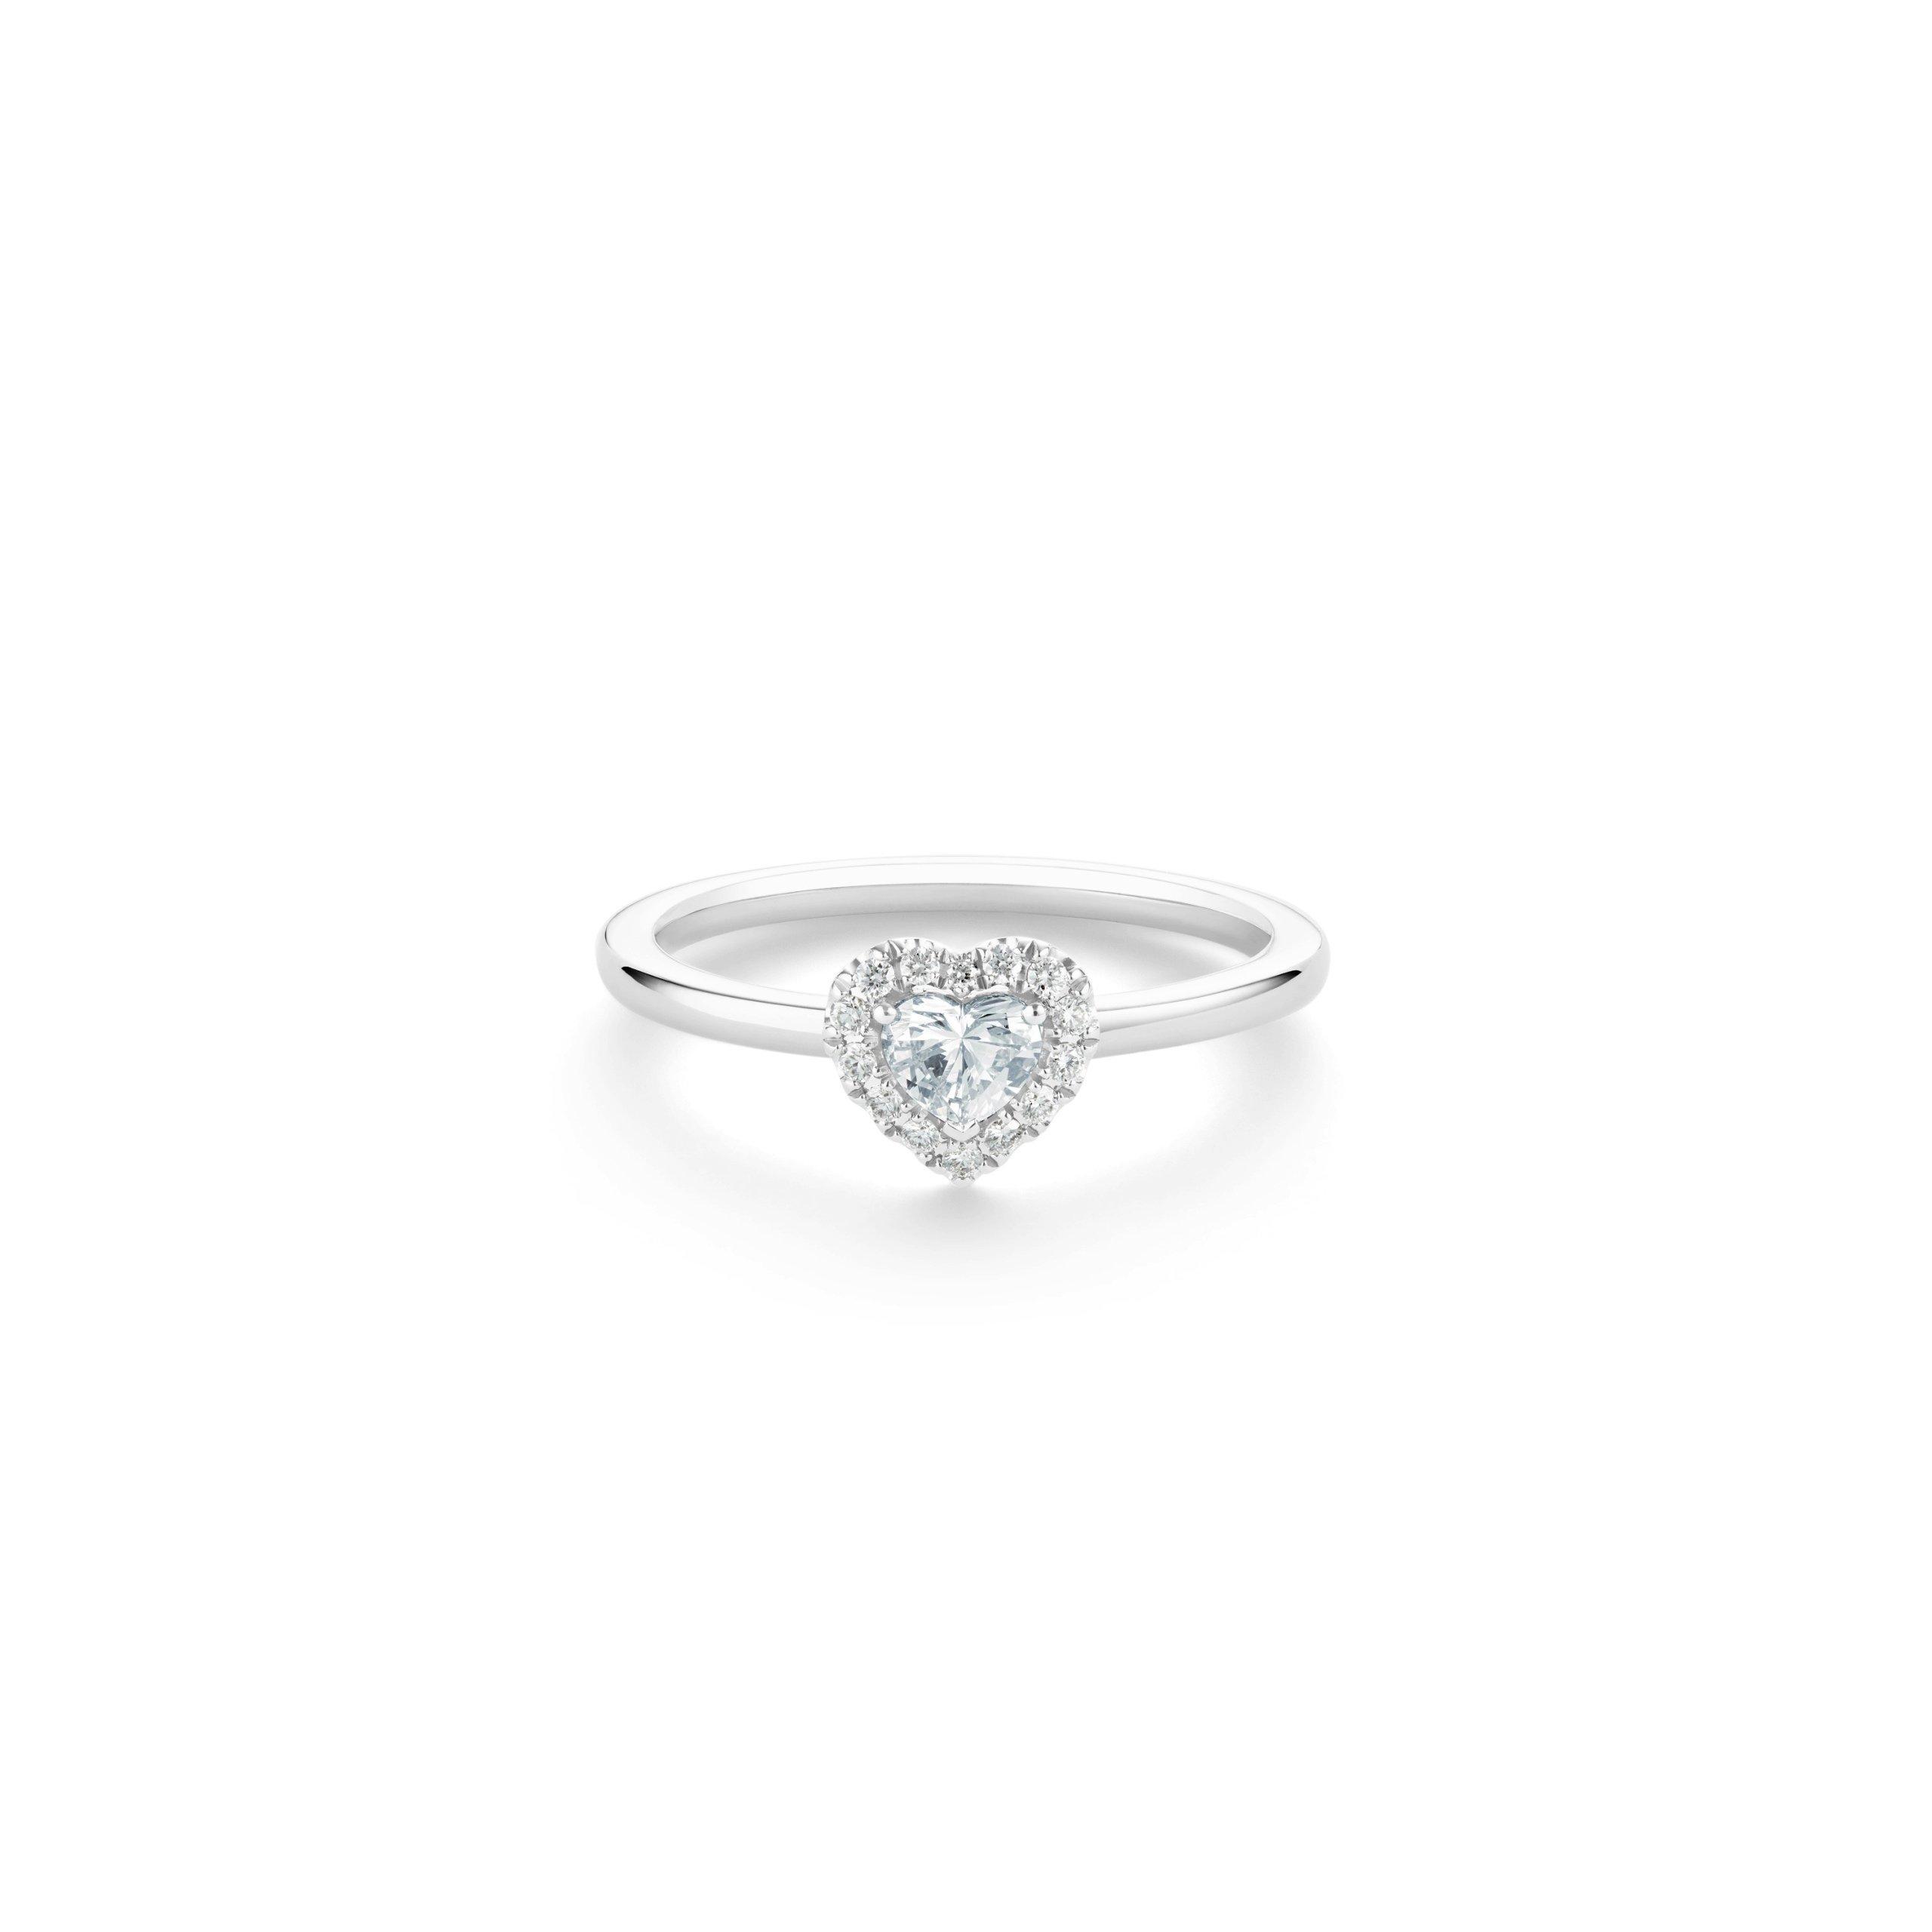 Aura heart-shaped diamond ring in platinum